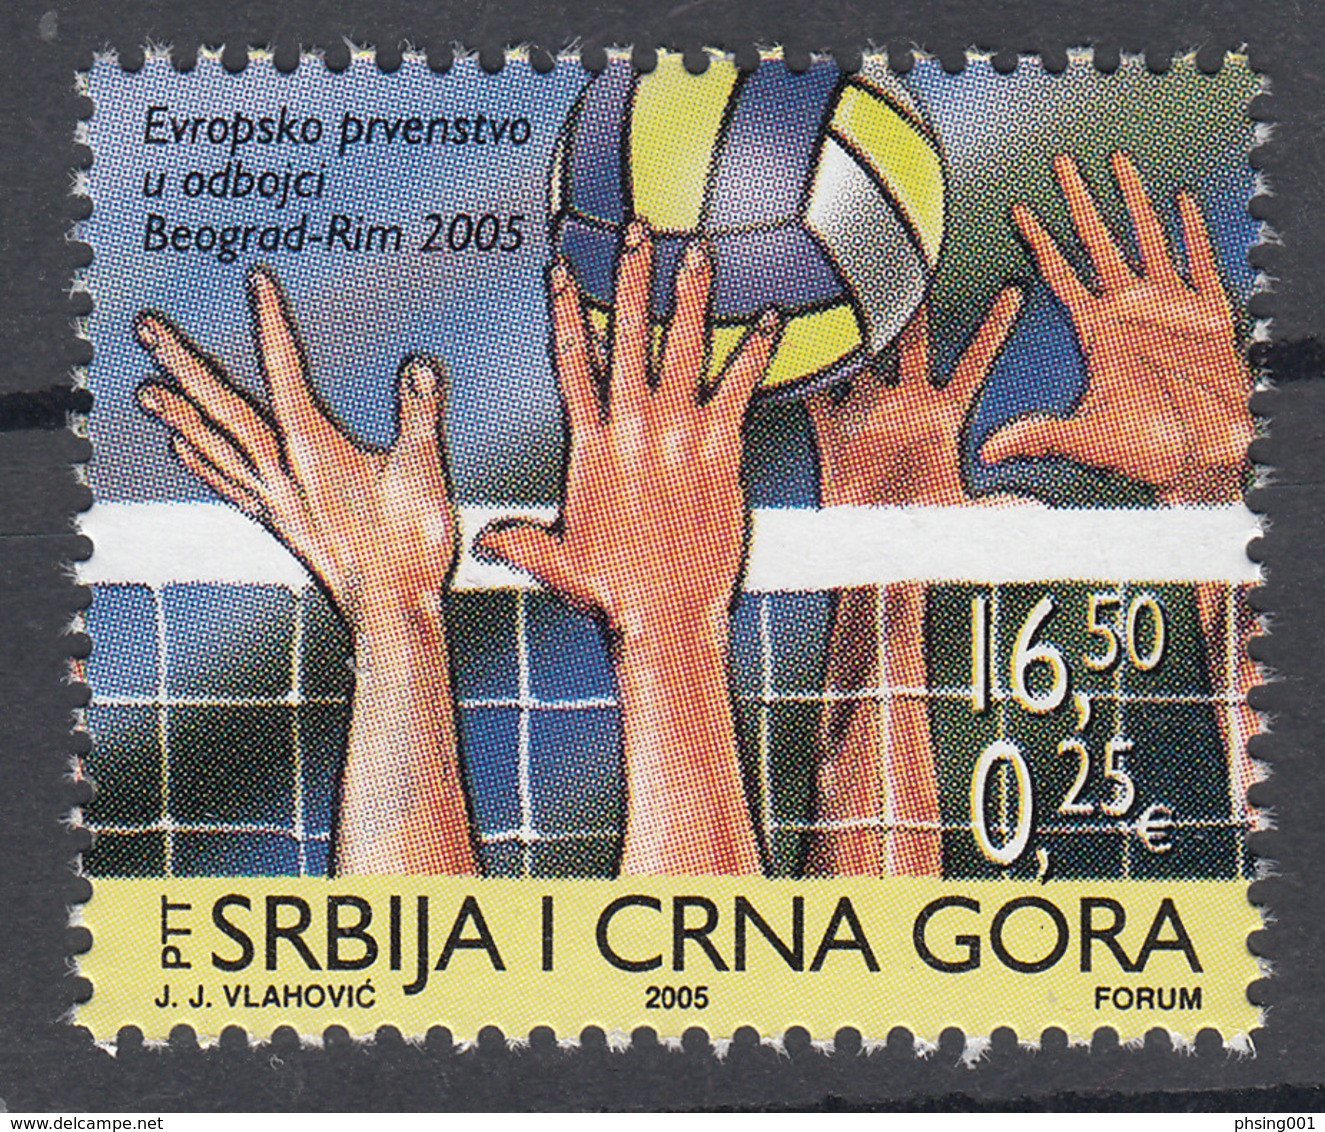 Yugoslavia 2005 European Championship Volleyball Rome Belgrade Italy Serbia Sports MNH - Volleyball